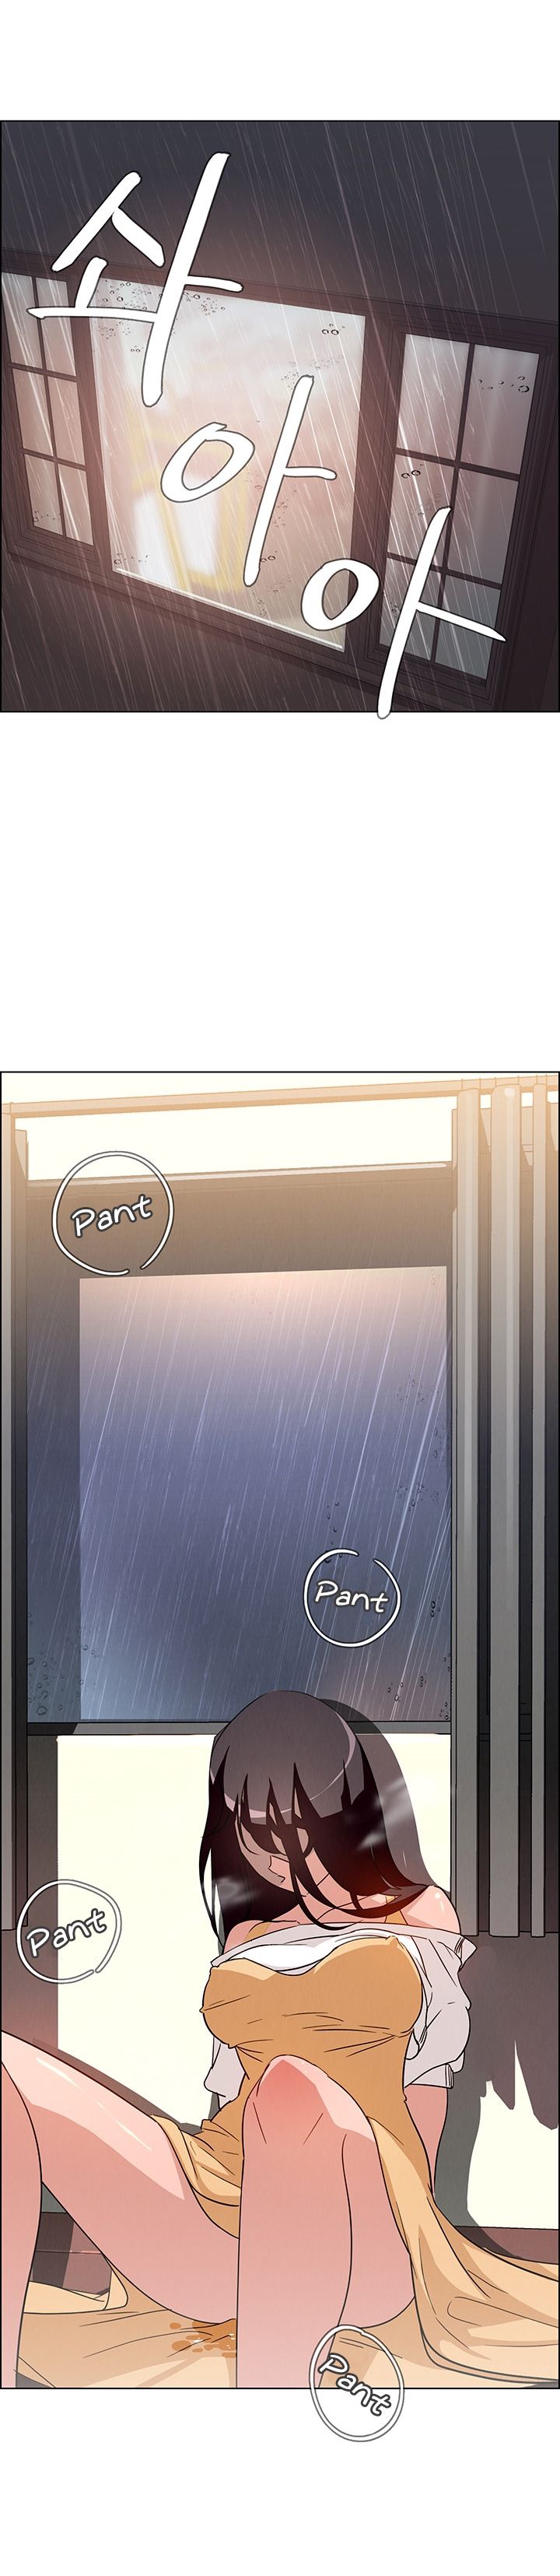 Rain Curtain 9